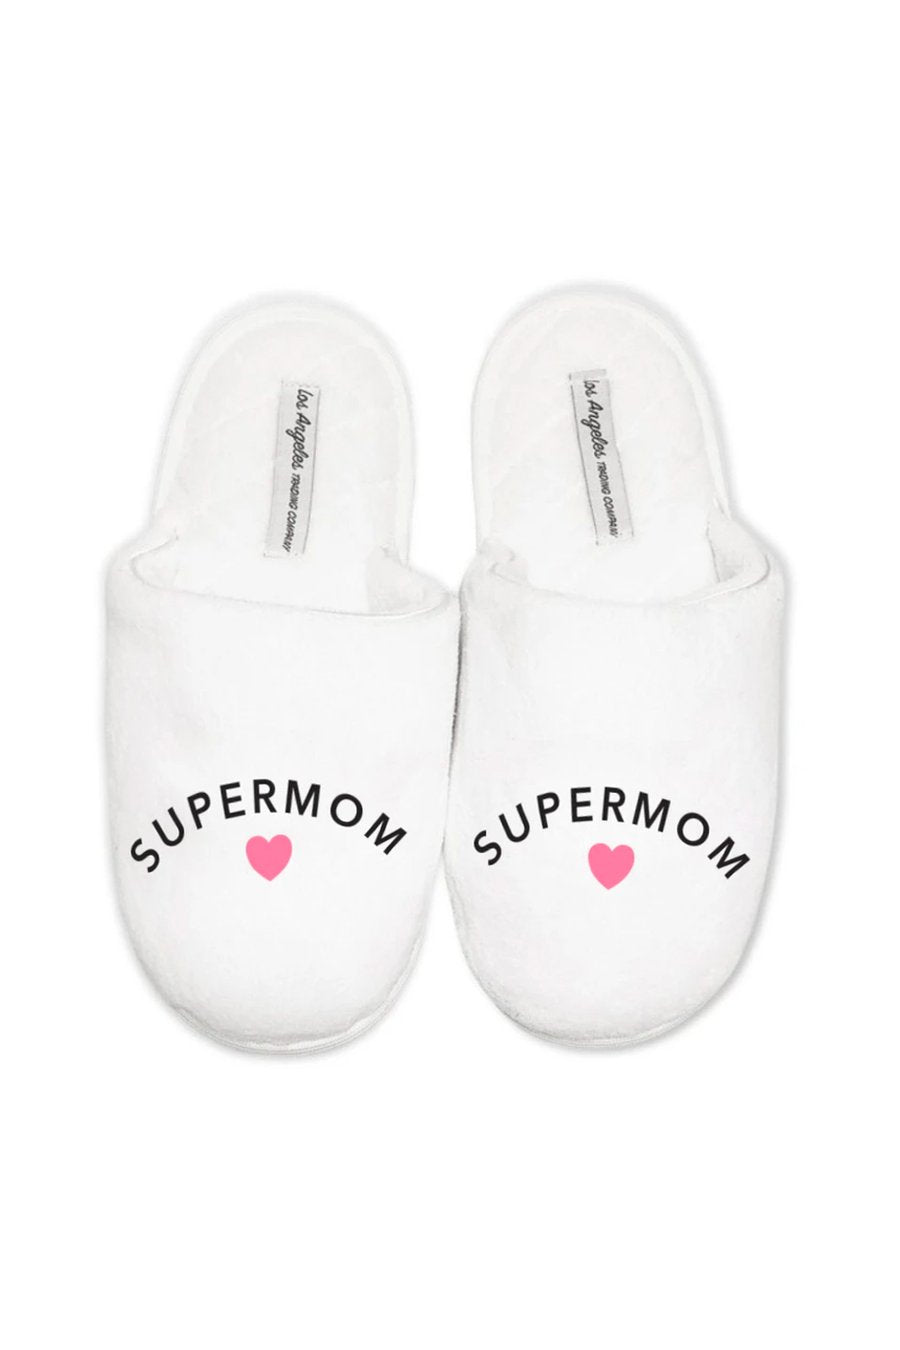 Supermom Slippers